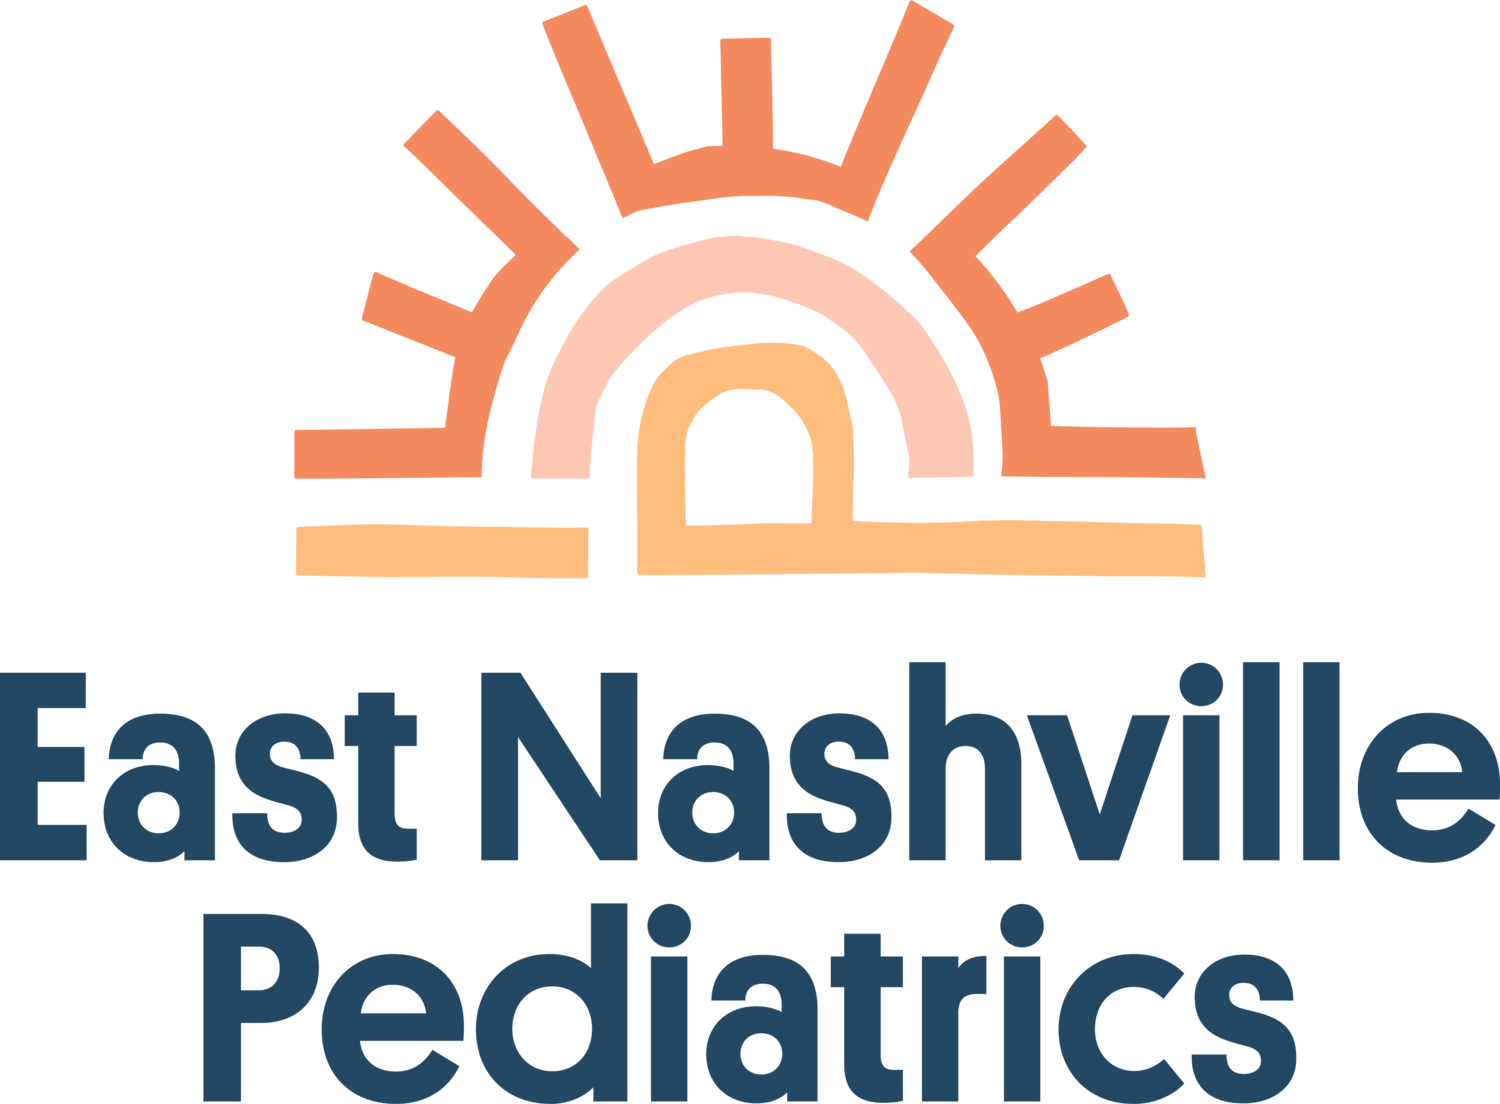 East Nashville Pediatrics